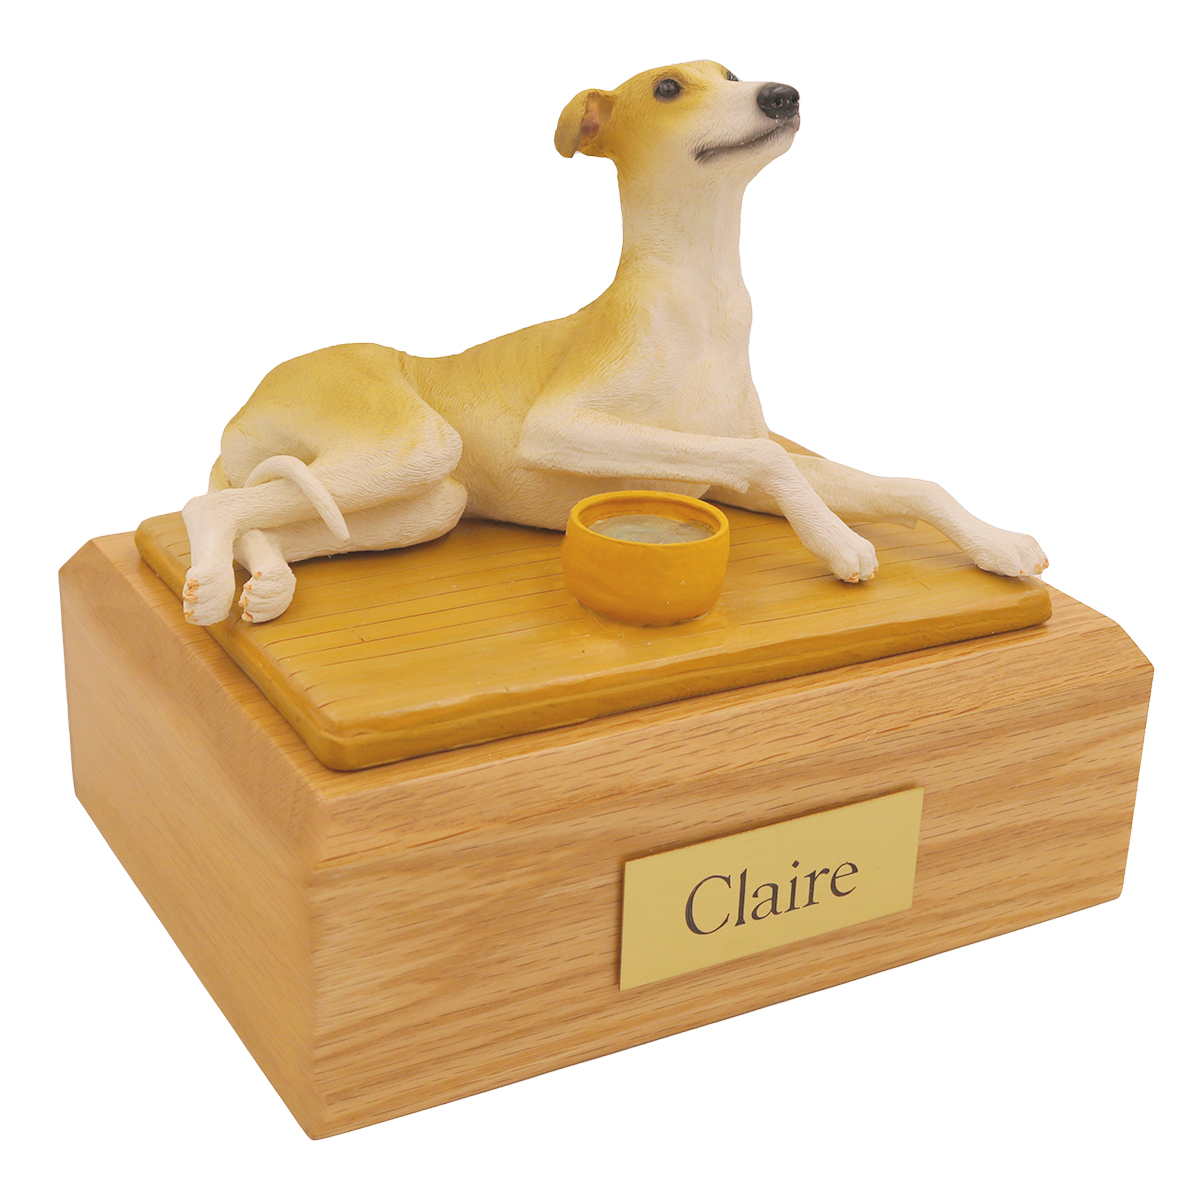 Dog, Greyhound, Tan - Figurine Urn